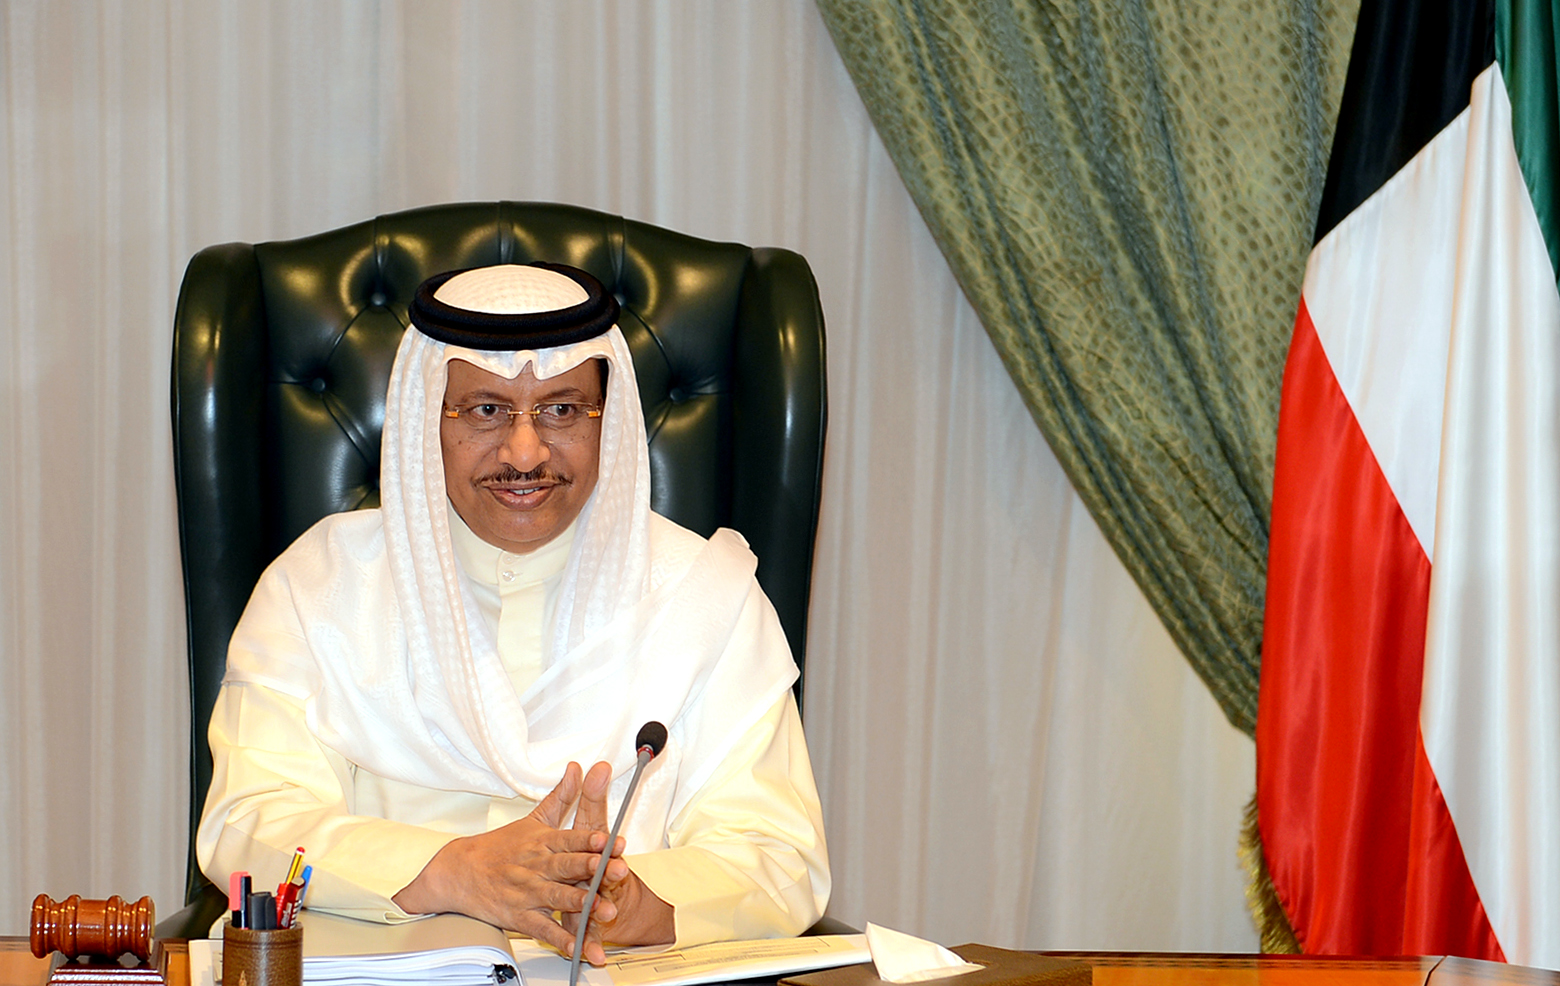 His Highness the Prime Minister Sheikh Jaber Al-Mubarak Al-Hamad Al-Sabah chairs Supreme Petroleum Council meeting